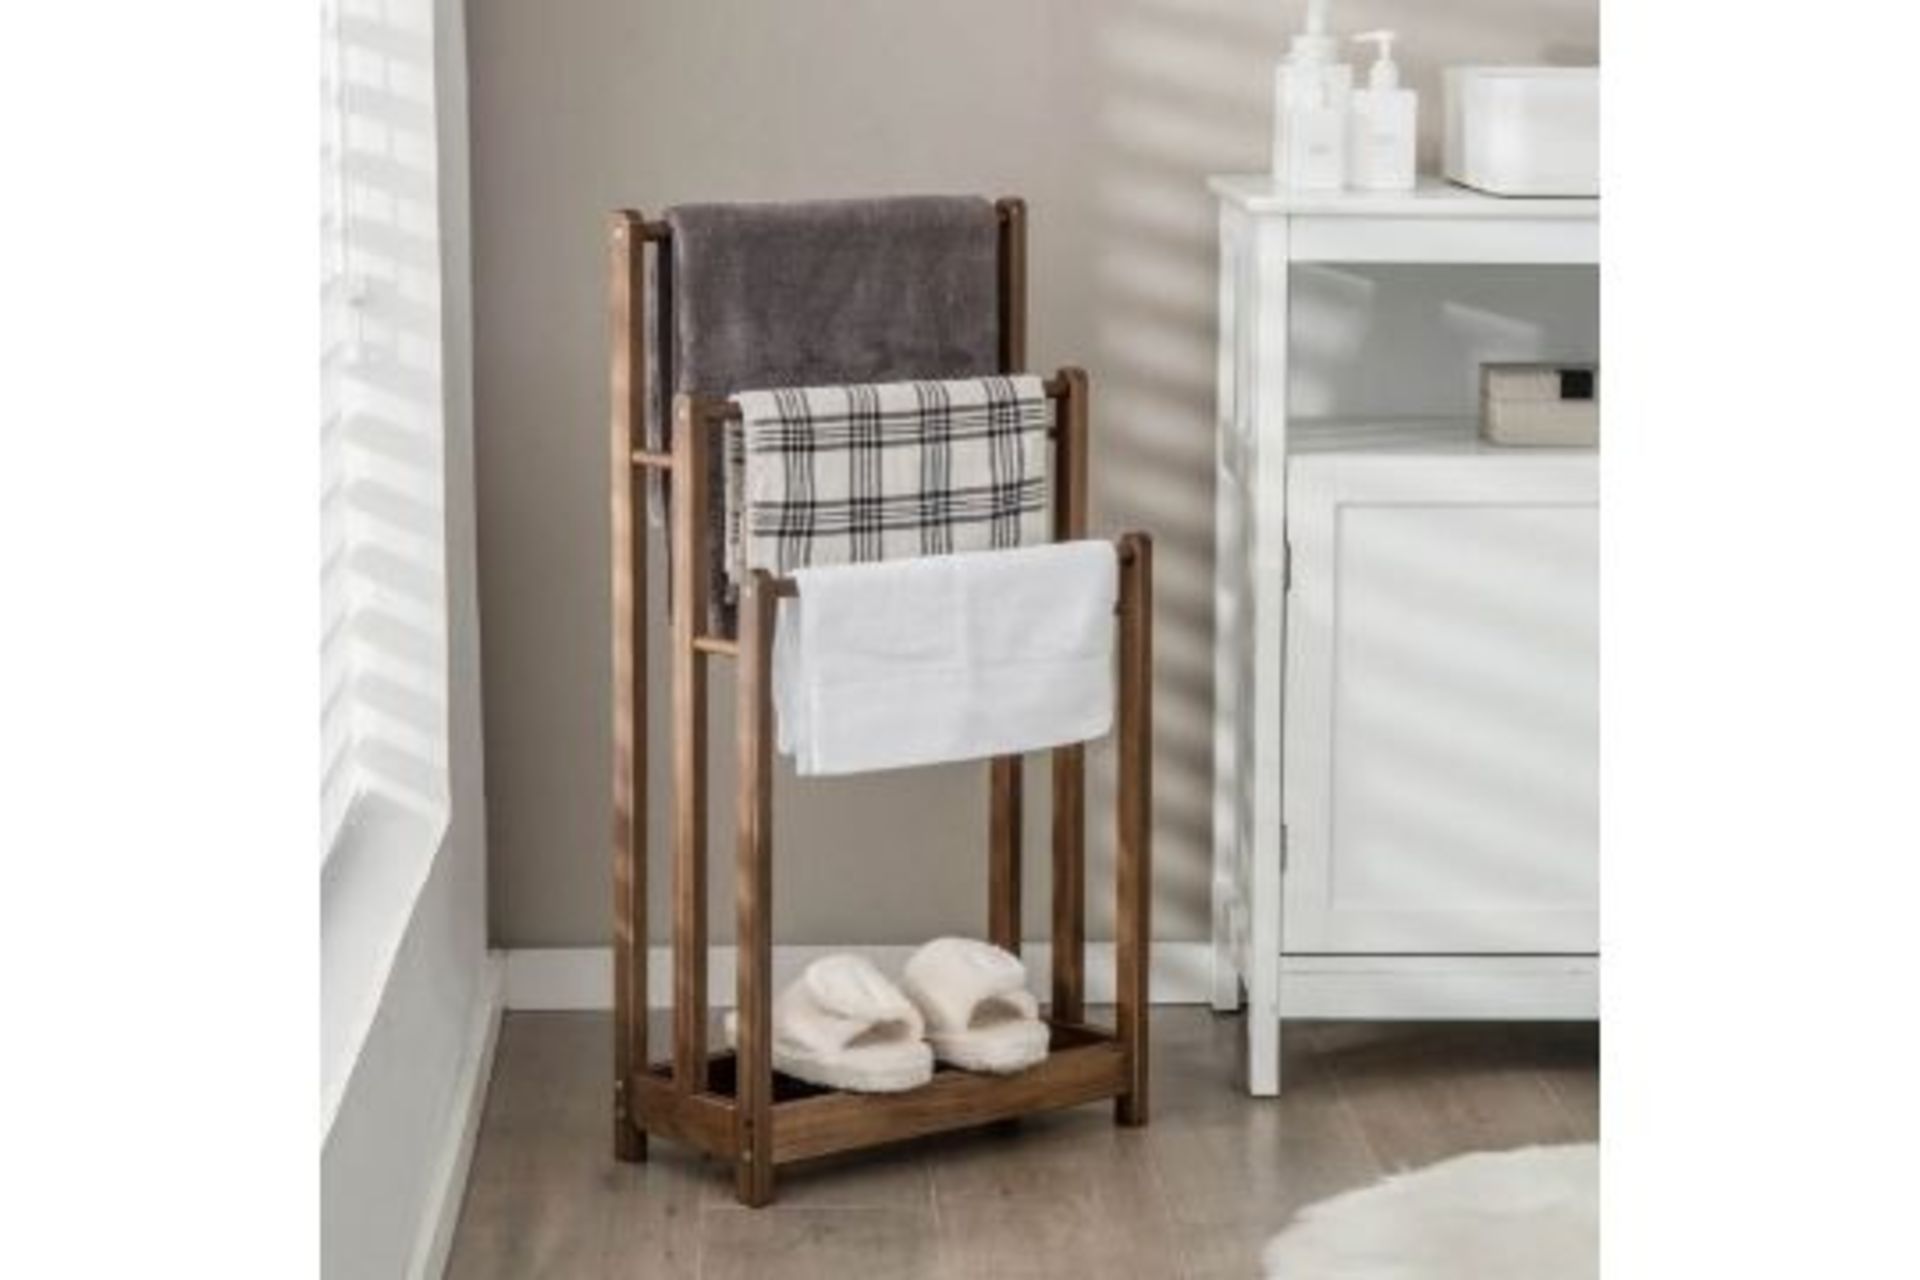 Freestanding Wood Towel Rack with 3 Individual Bars and Bottom Storage Shelf. - ER24